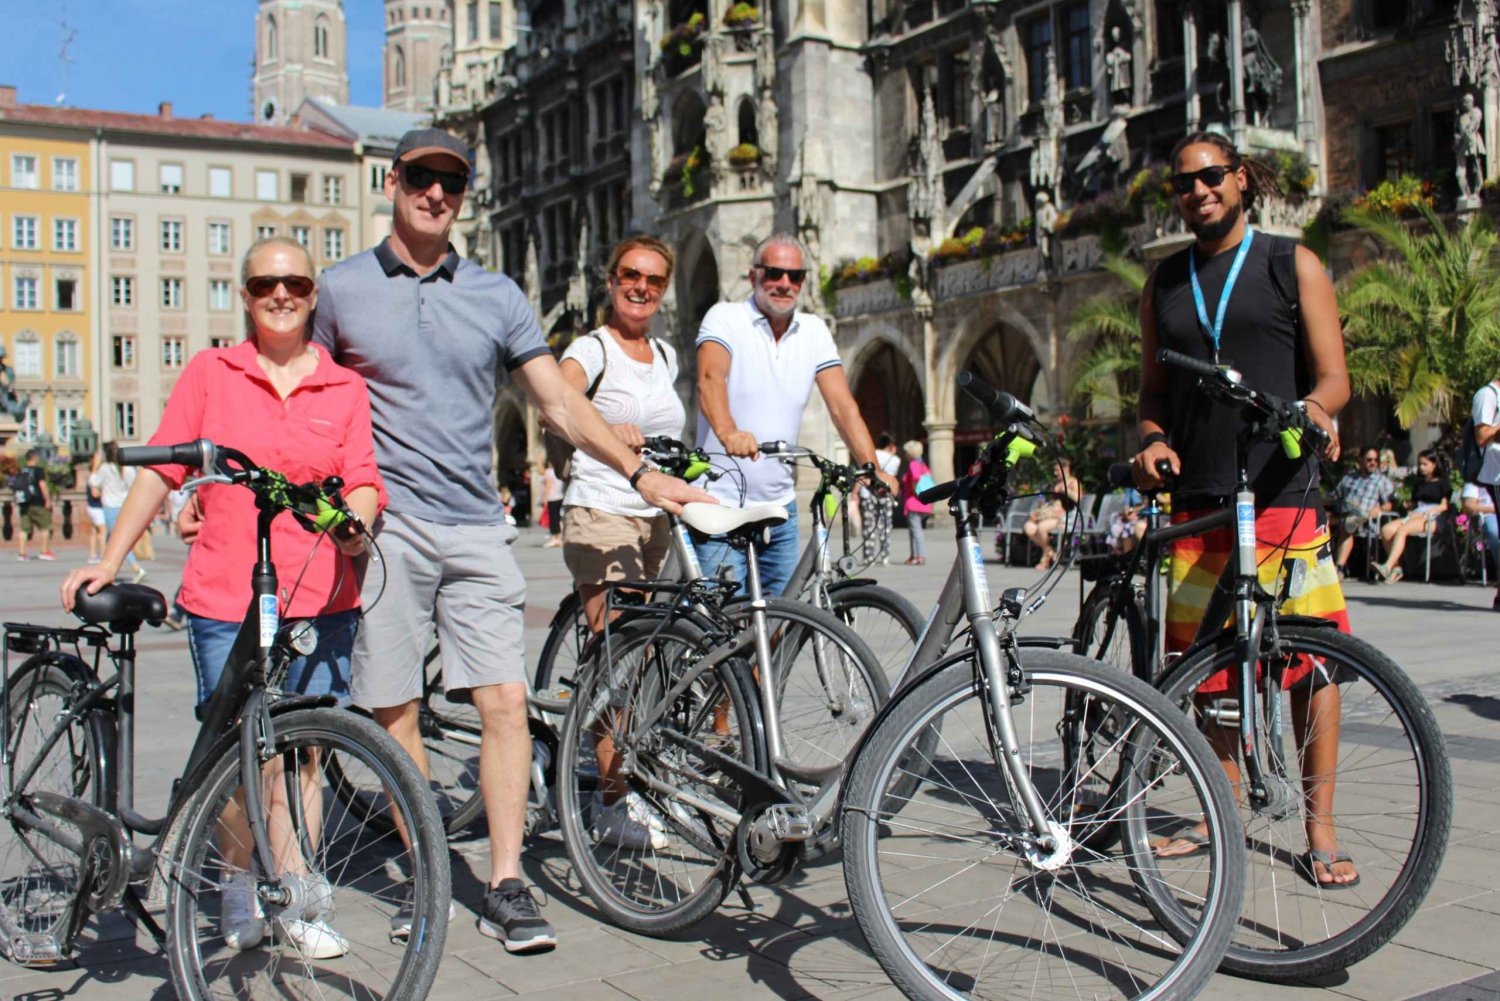 München på cykel: Halvdagsudflugt med lokal guide